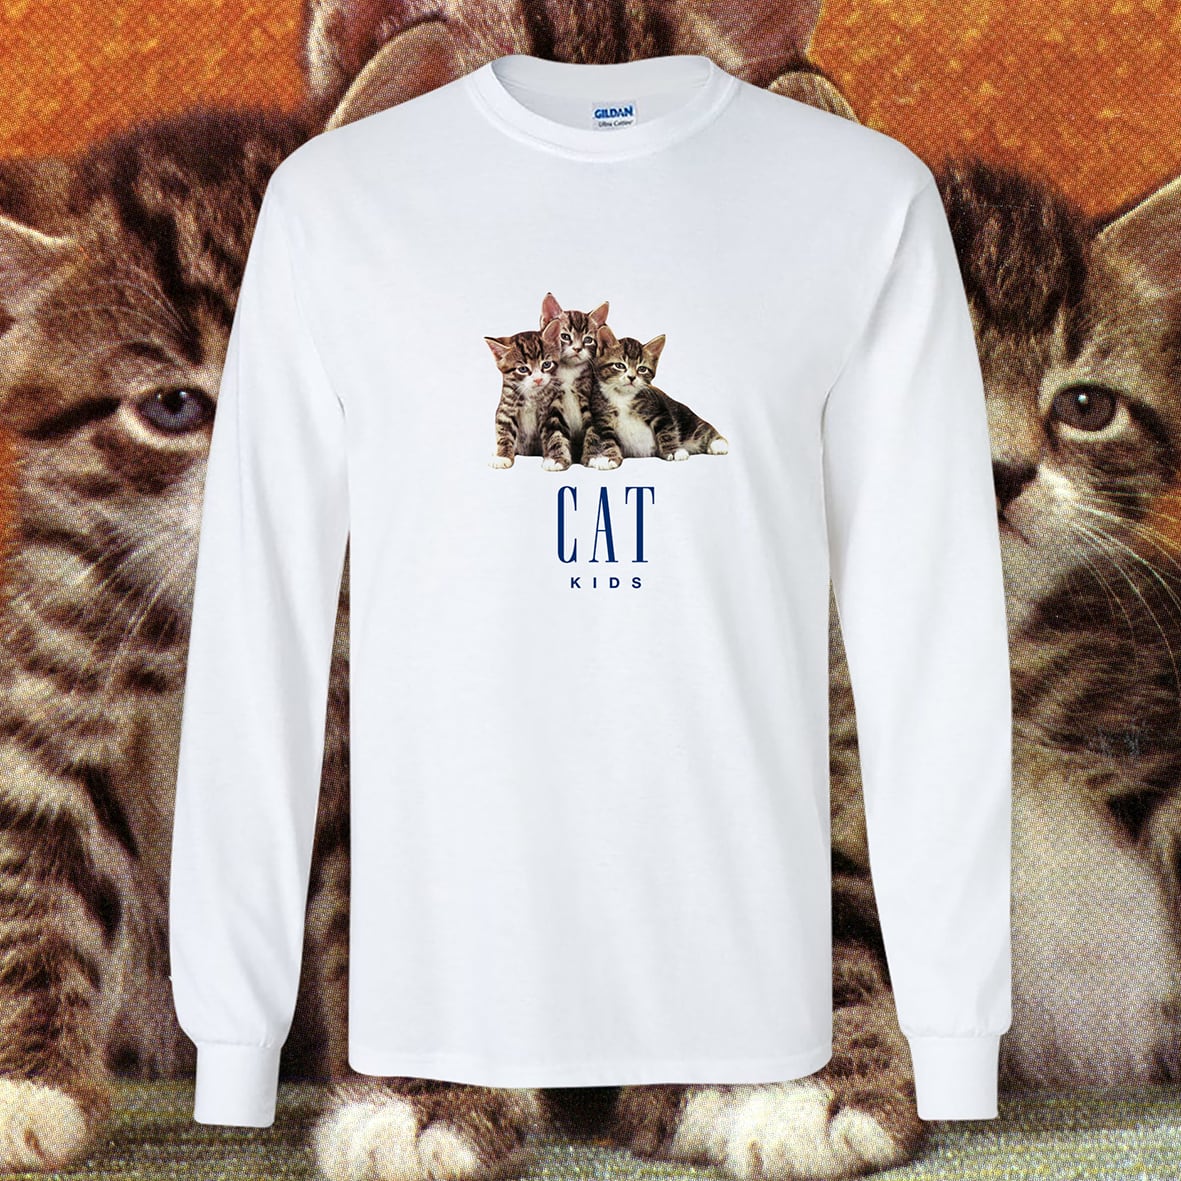 CAT KIDS t-shirts （未開封）。